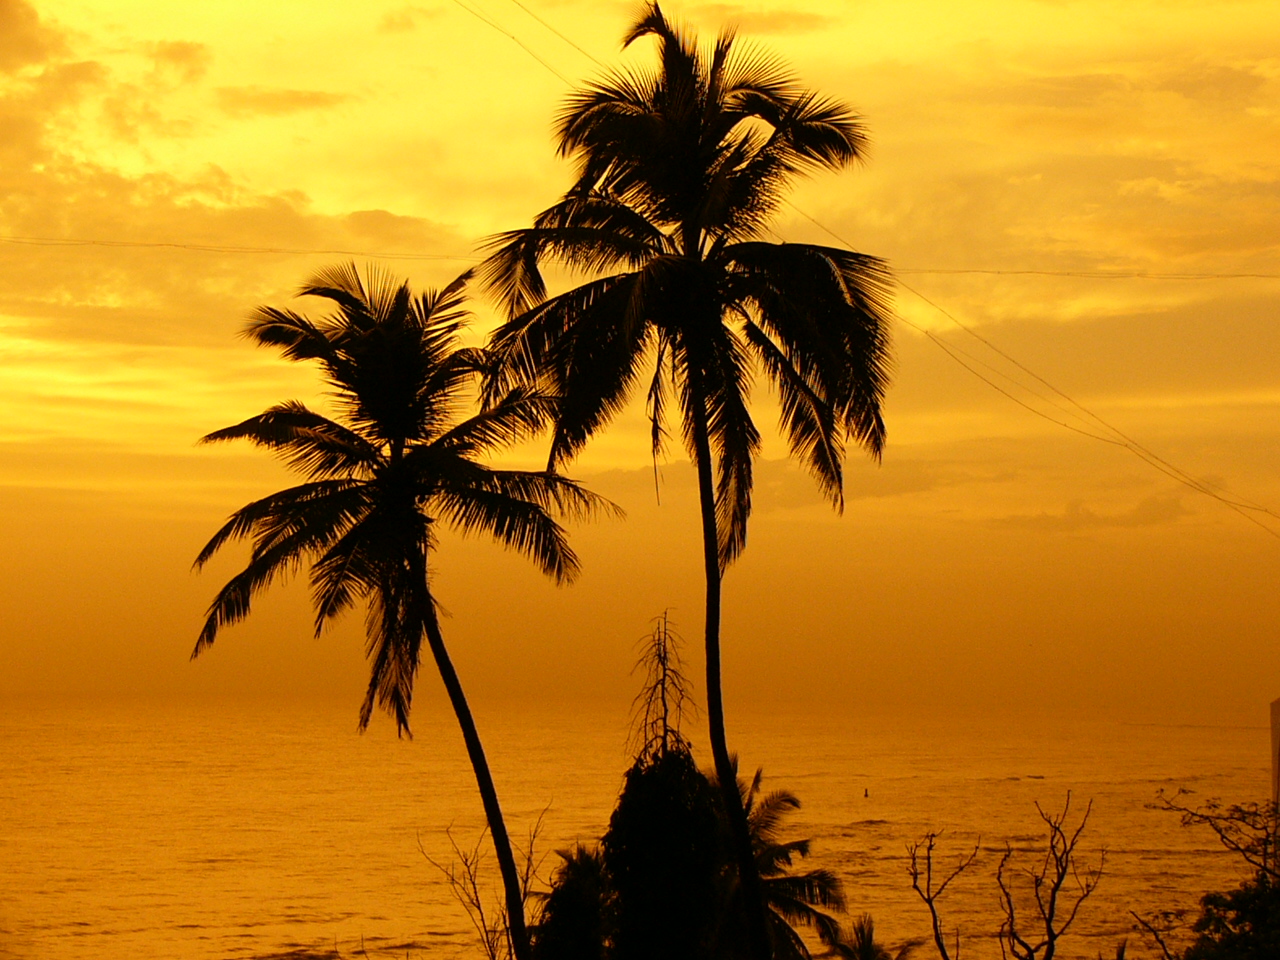 Coconut palm trees in Mumbai, India